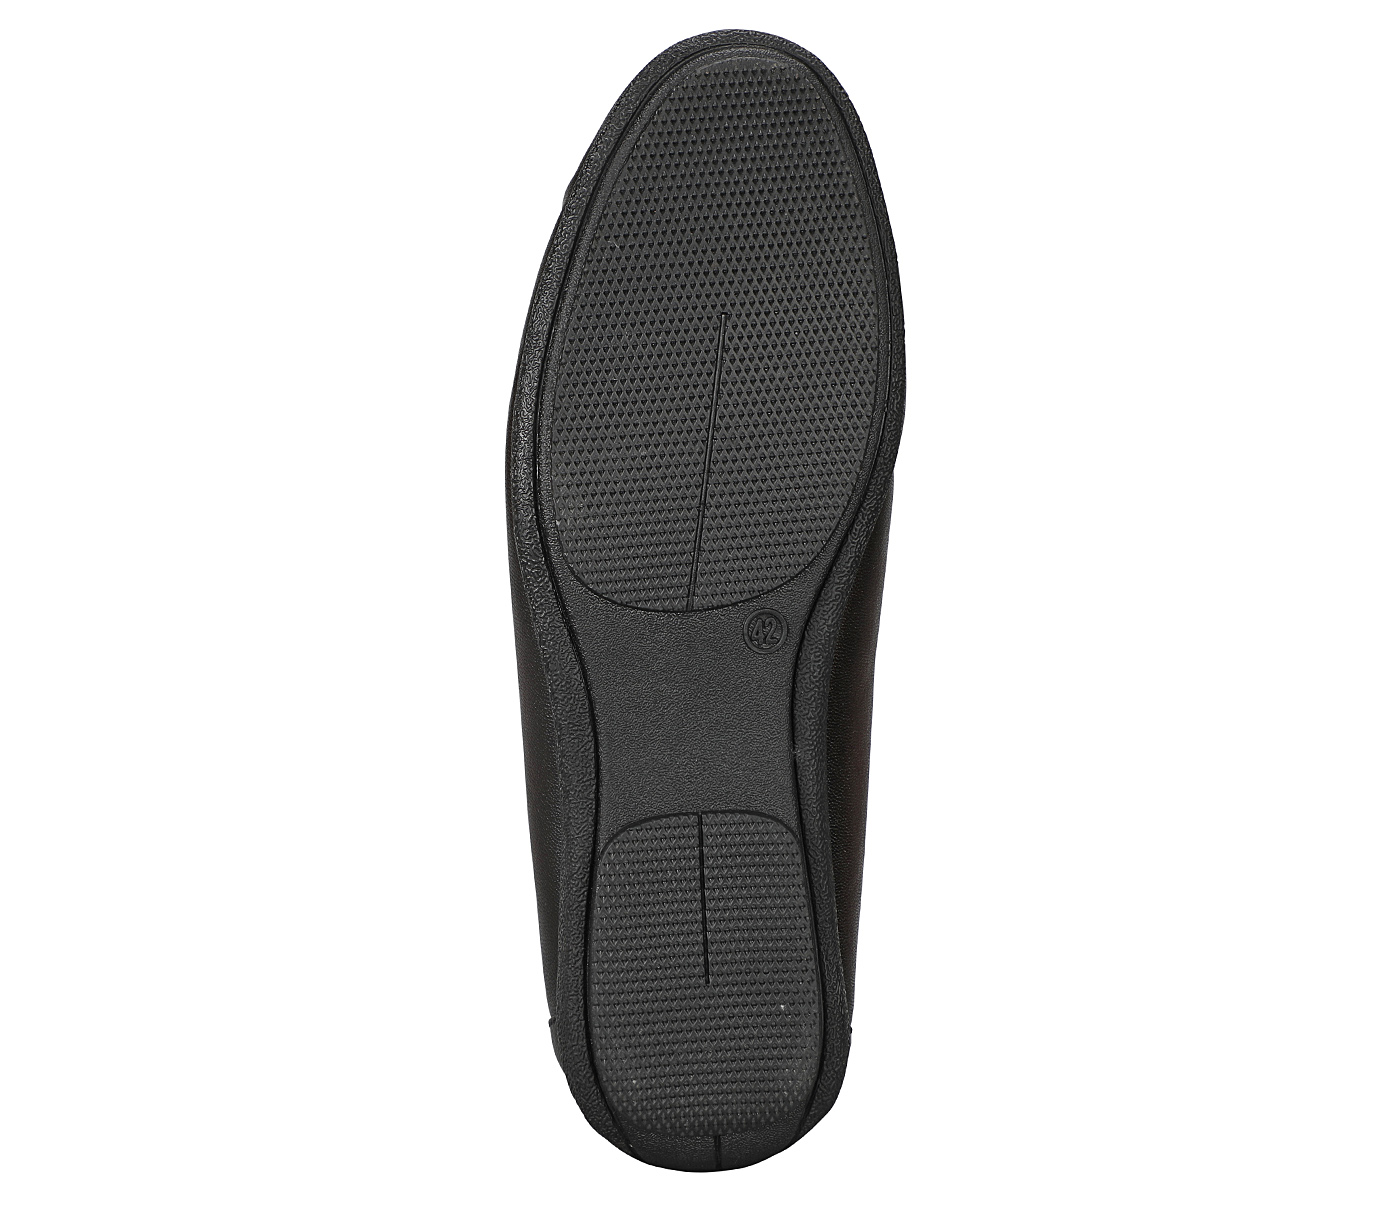 MG11-Adamis-Black Color Pure Leather Footwear For Men - Brown